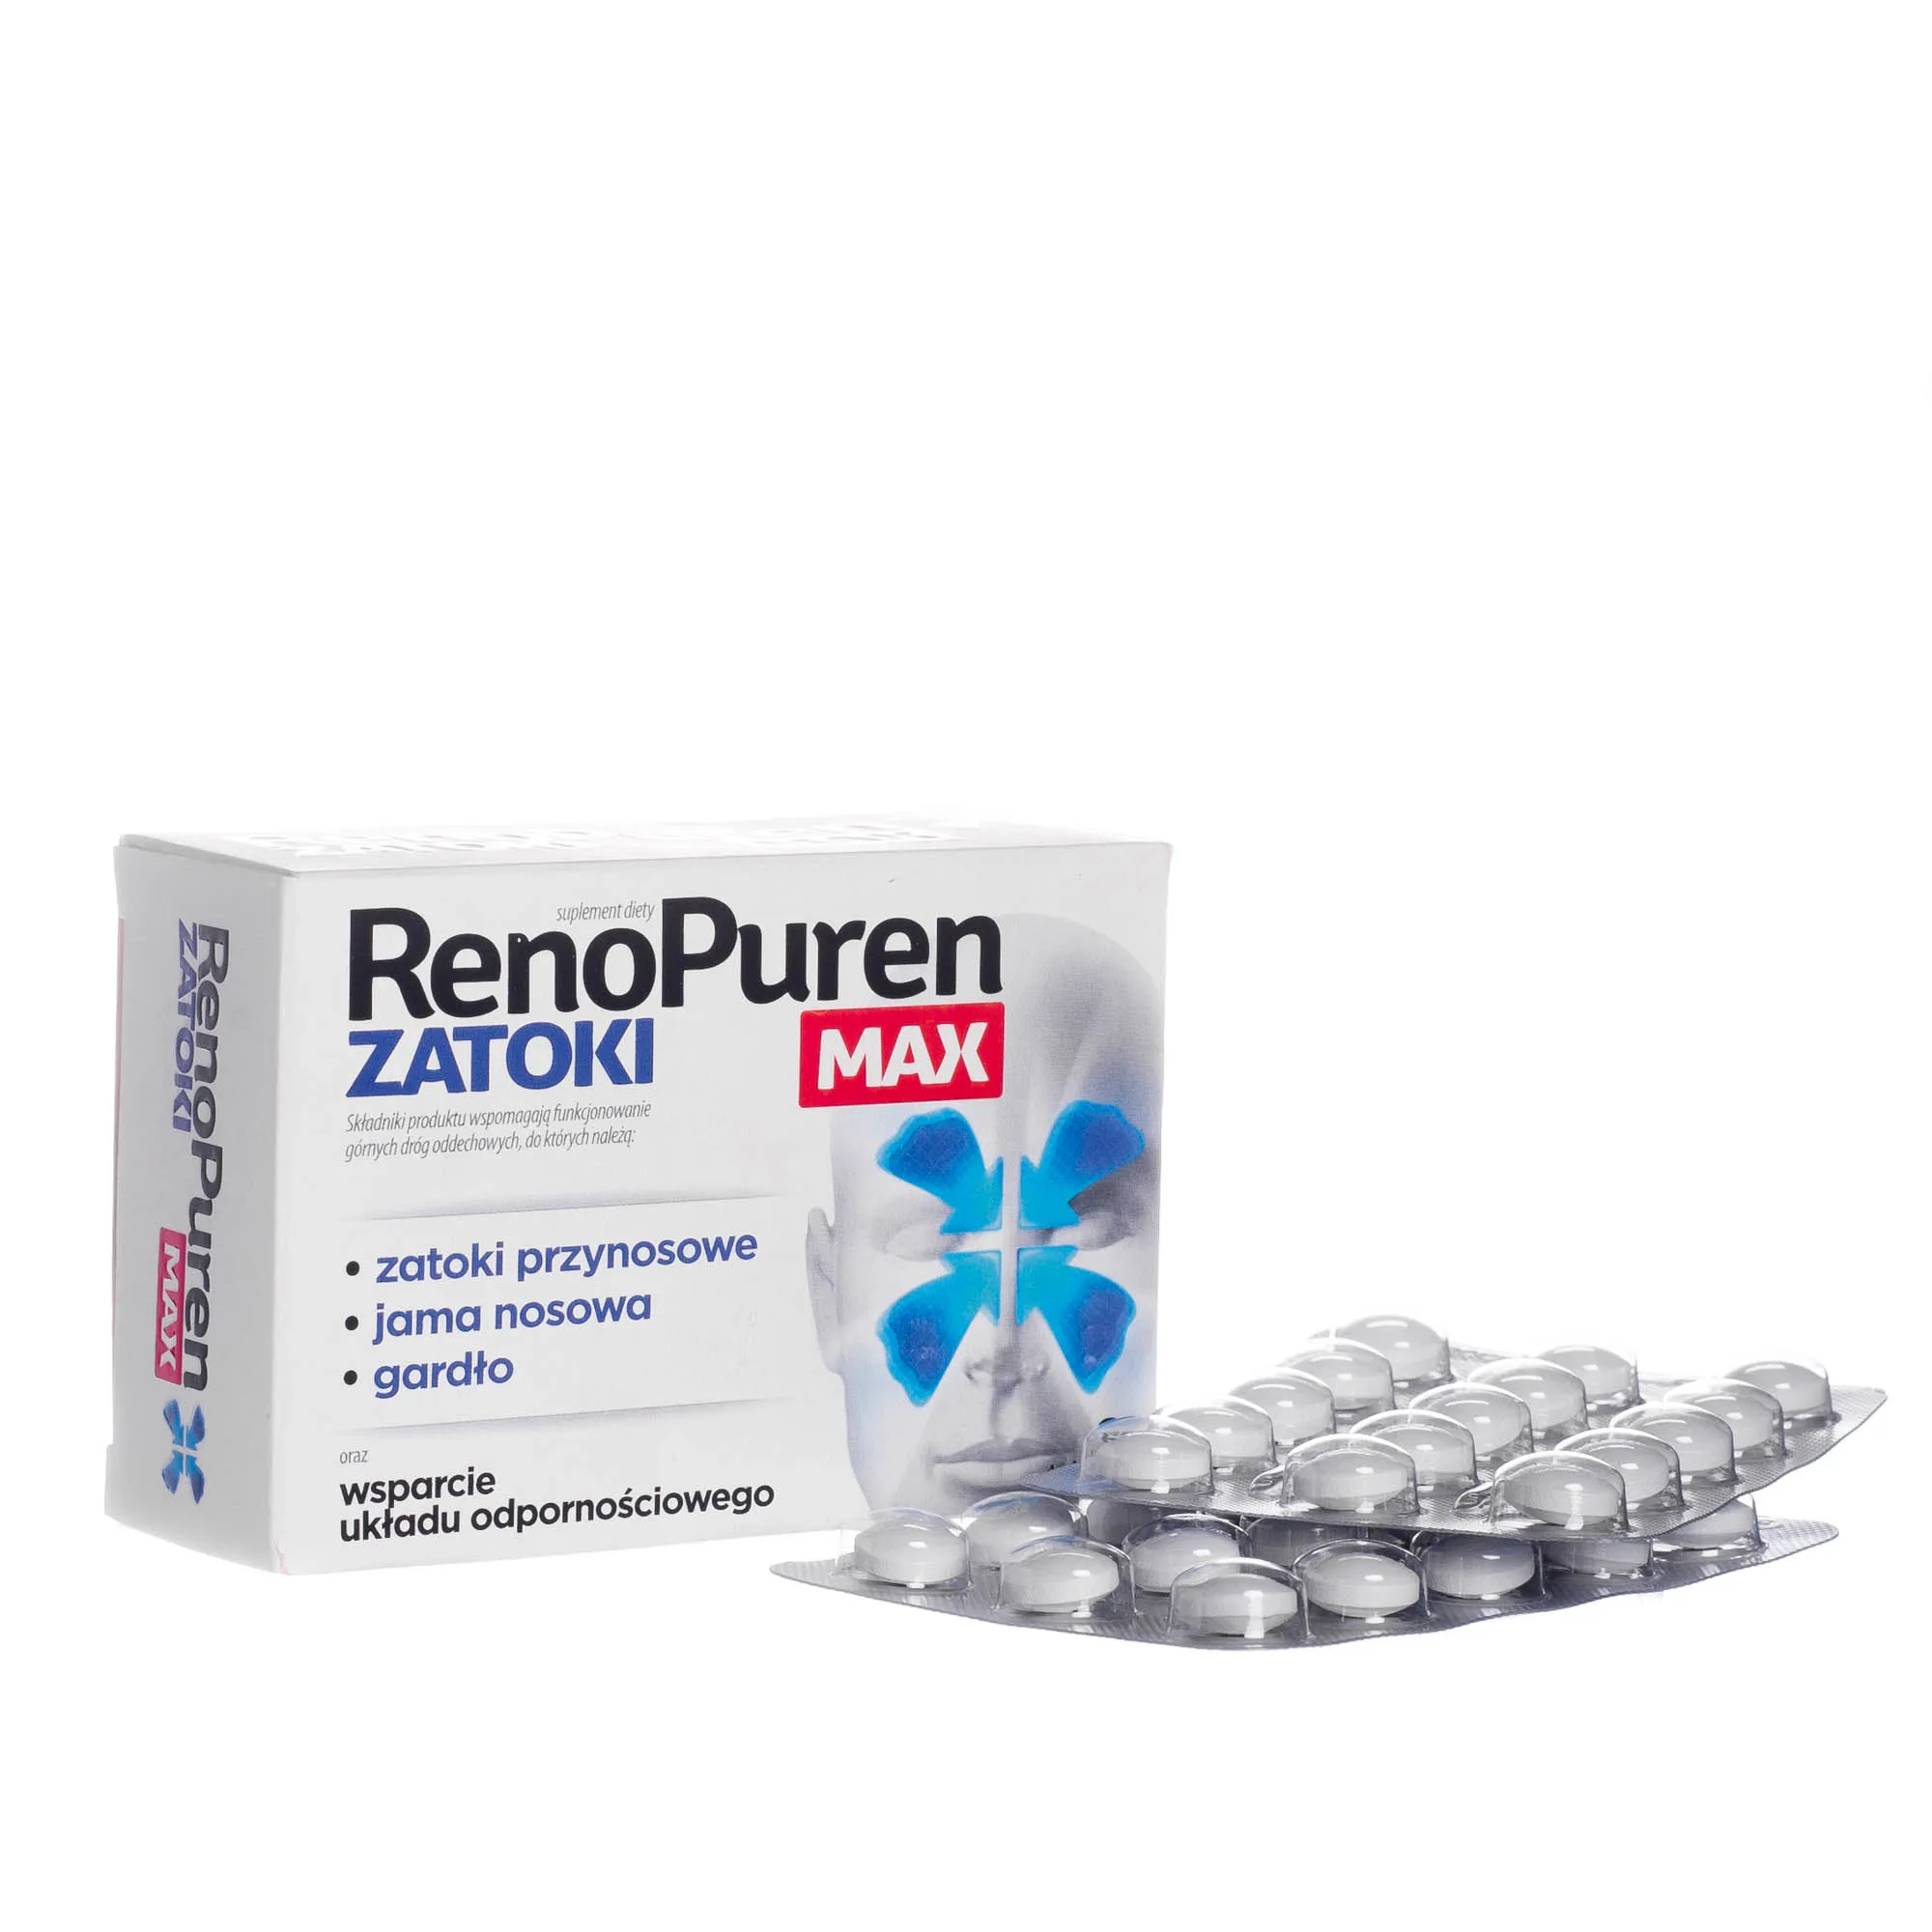 RenoPurenMAX Zatoki, suplement diety, 60 tabletek